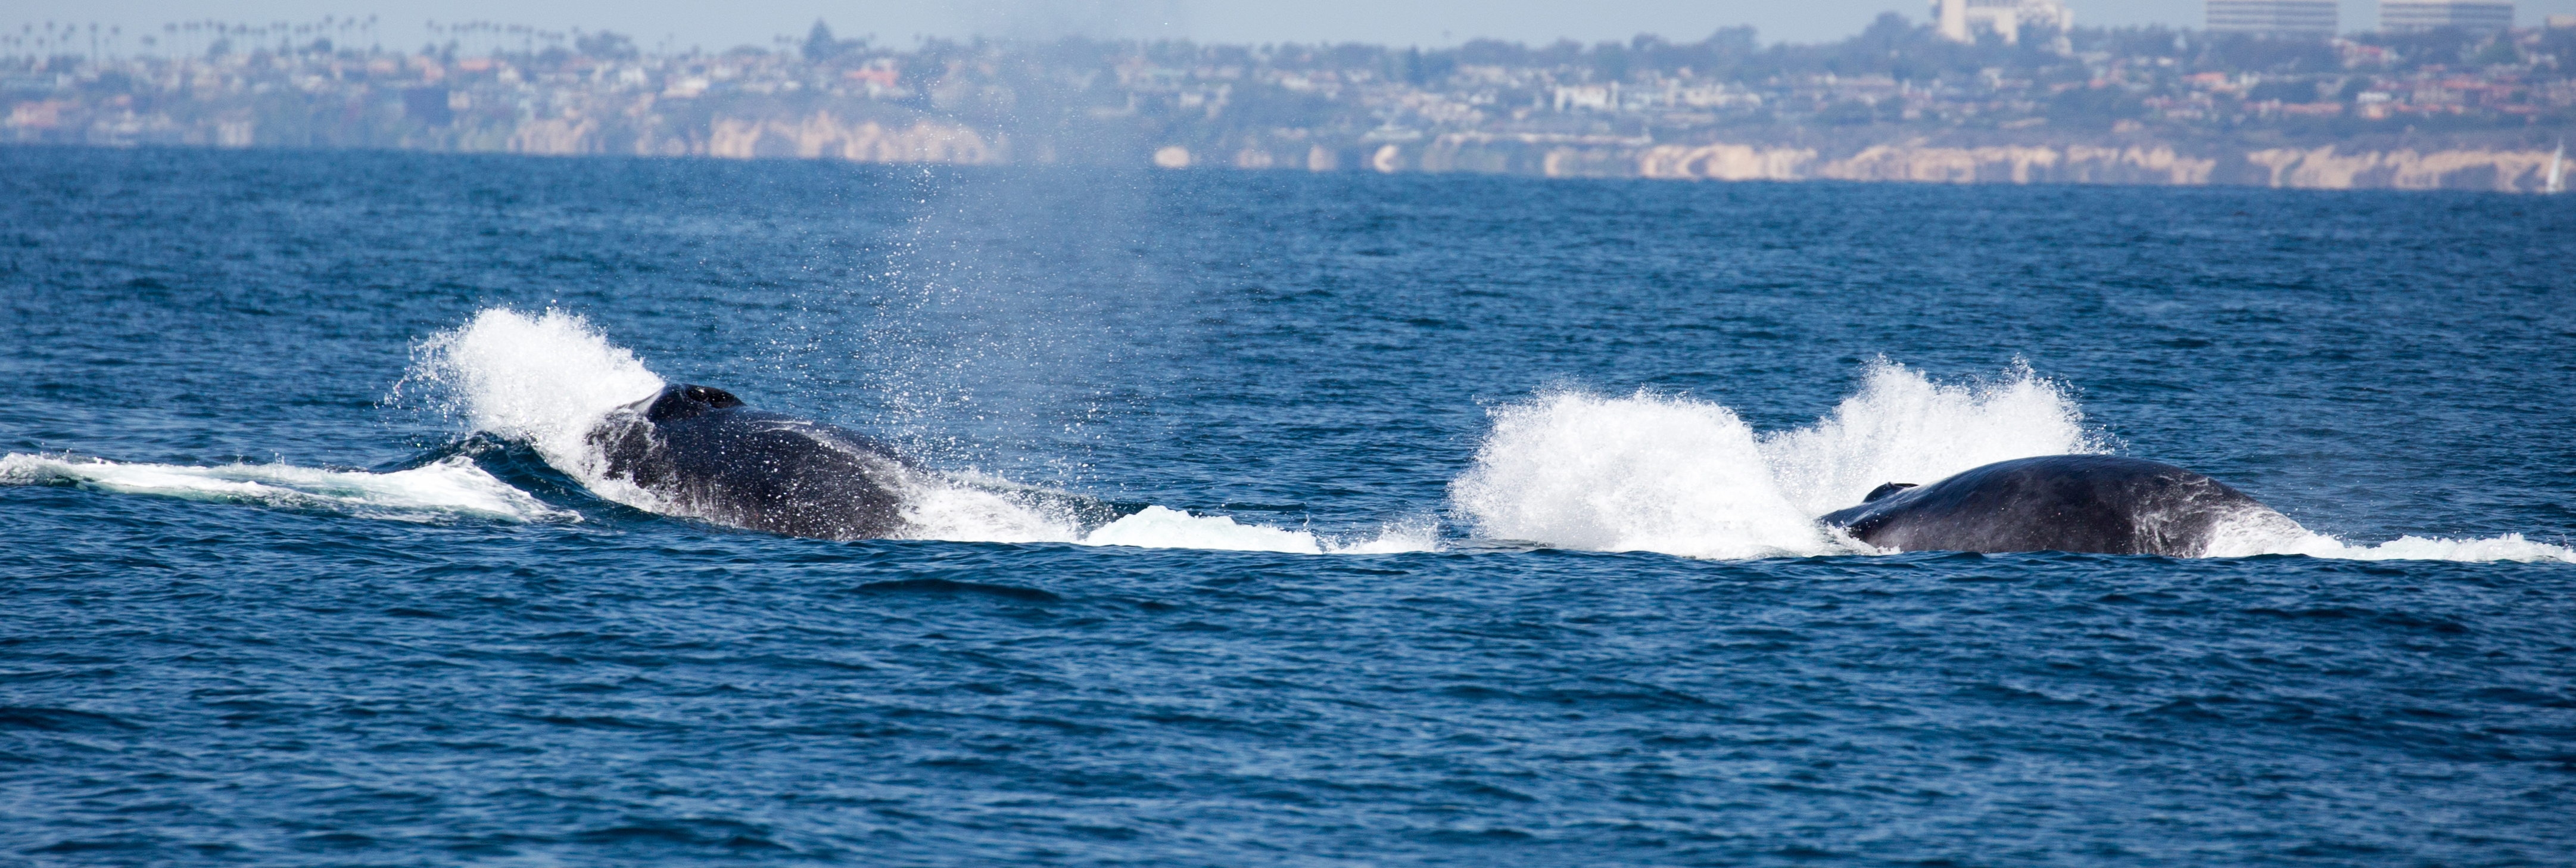 finback-whale-watching-Southern-California-tours